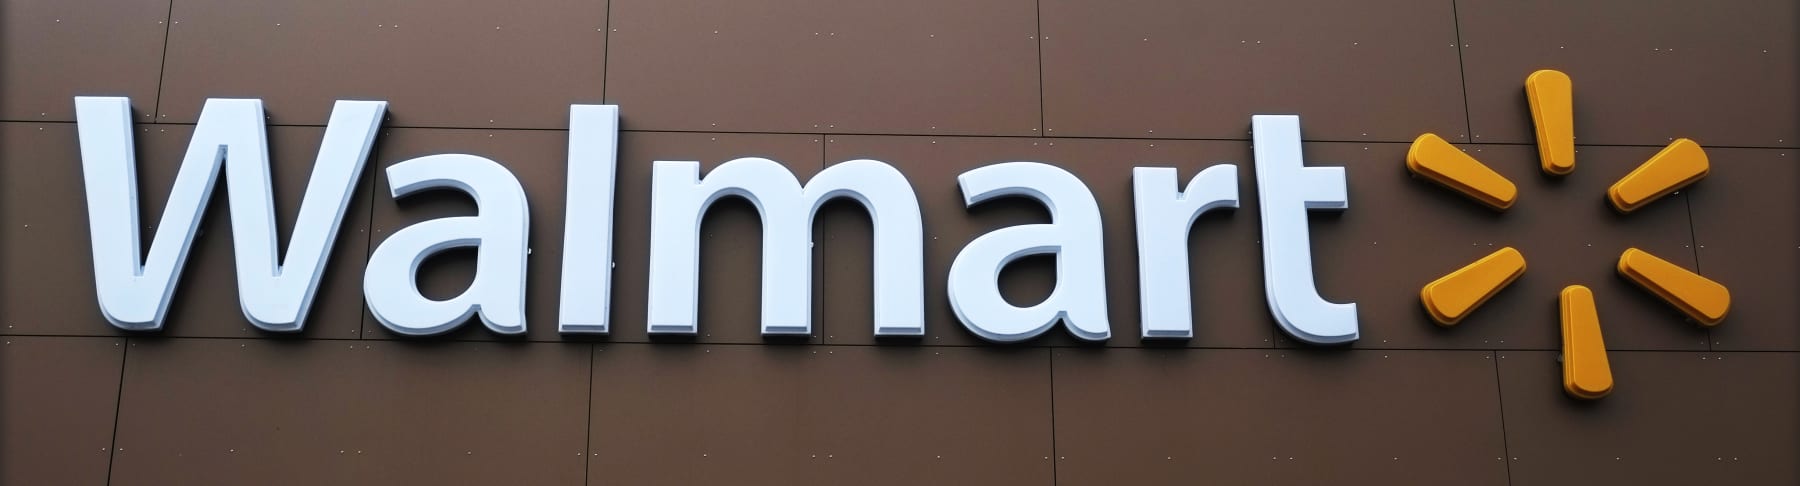 Walmart sign hangs on store.